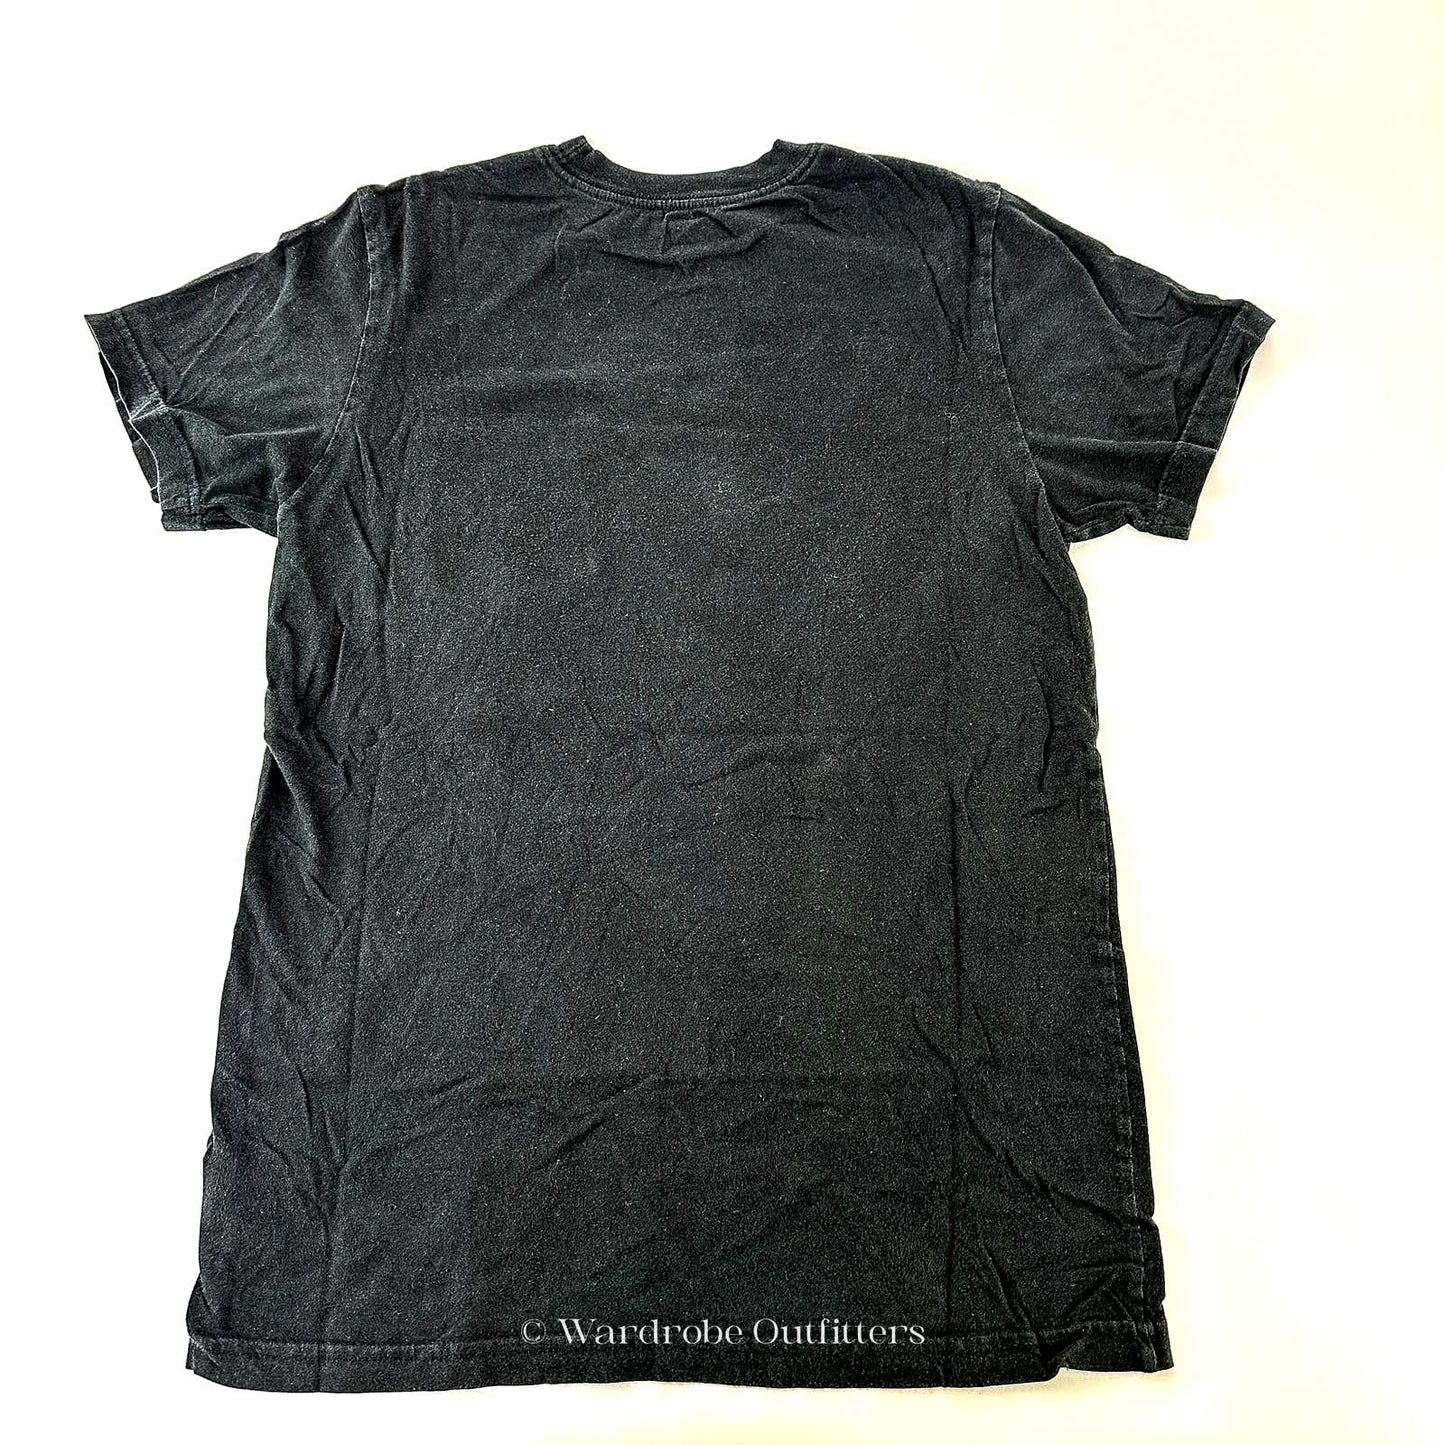 OBEY Propoganda Black Pocket Tee Shirt - S